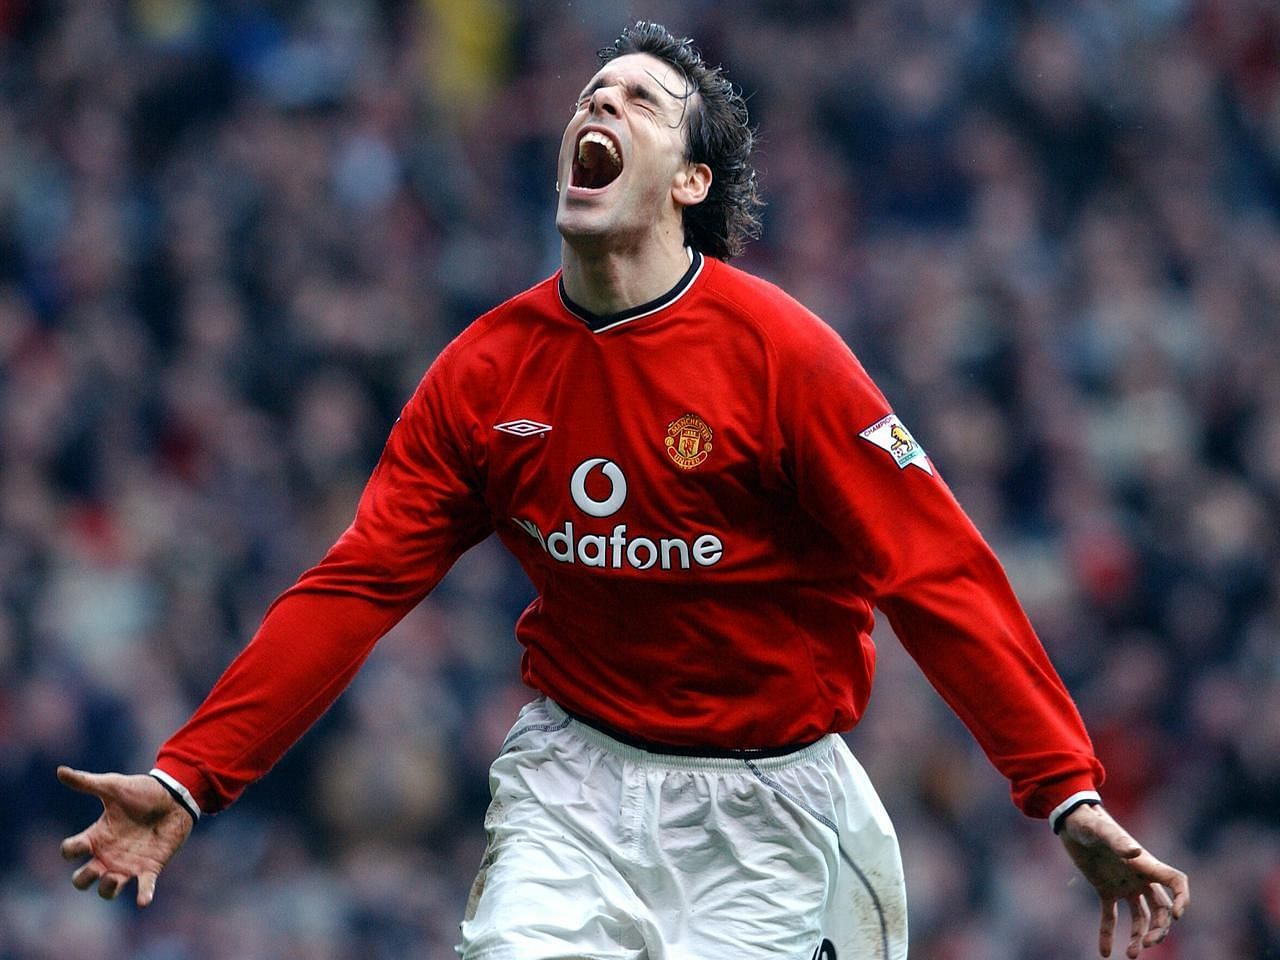 Ruud van Nistelrooy won the Premier League golden boot in 2002-03